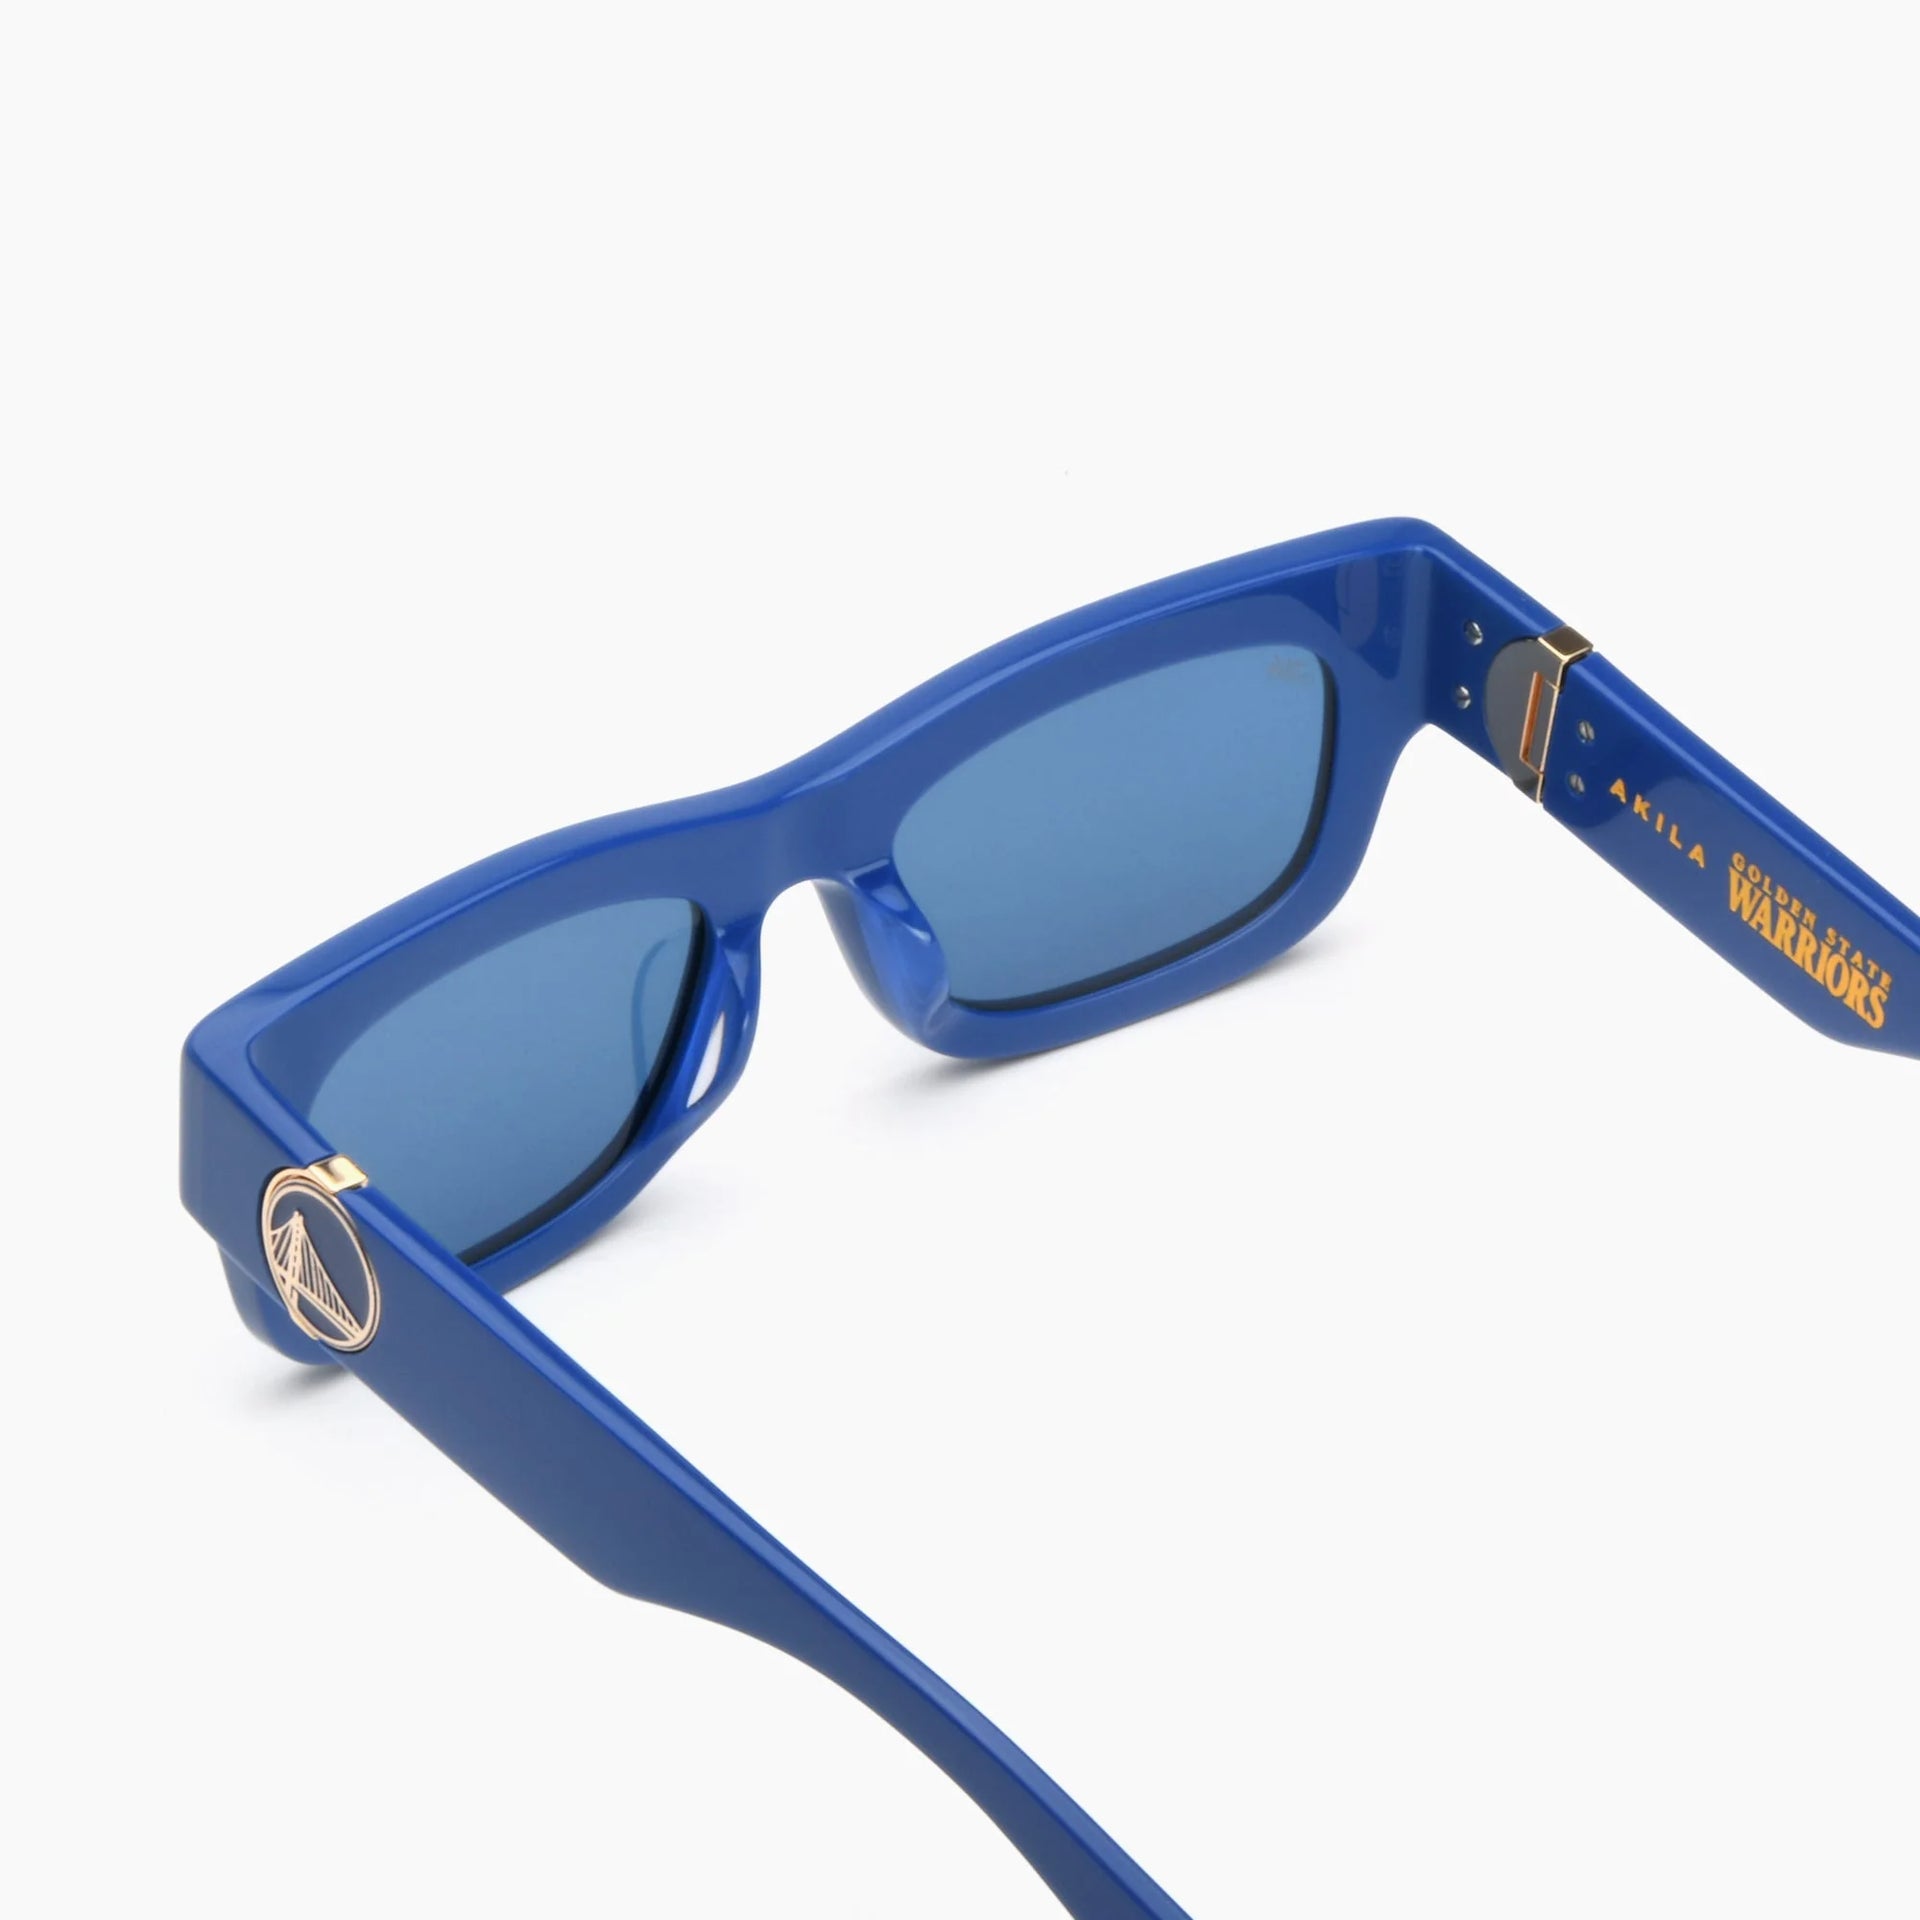 Jubilee x GS Warriors Sunglasses - Warriors Royal Blue